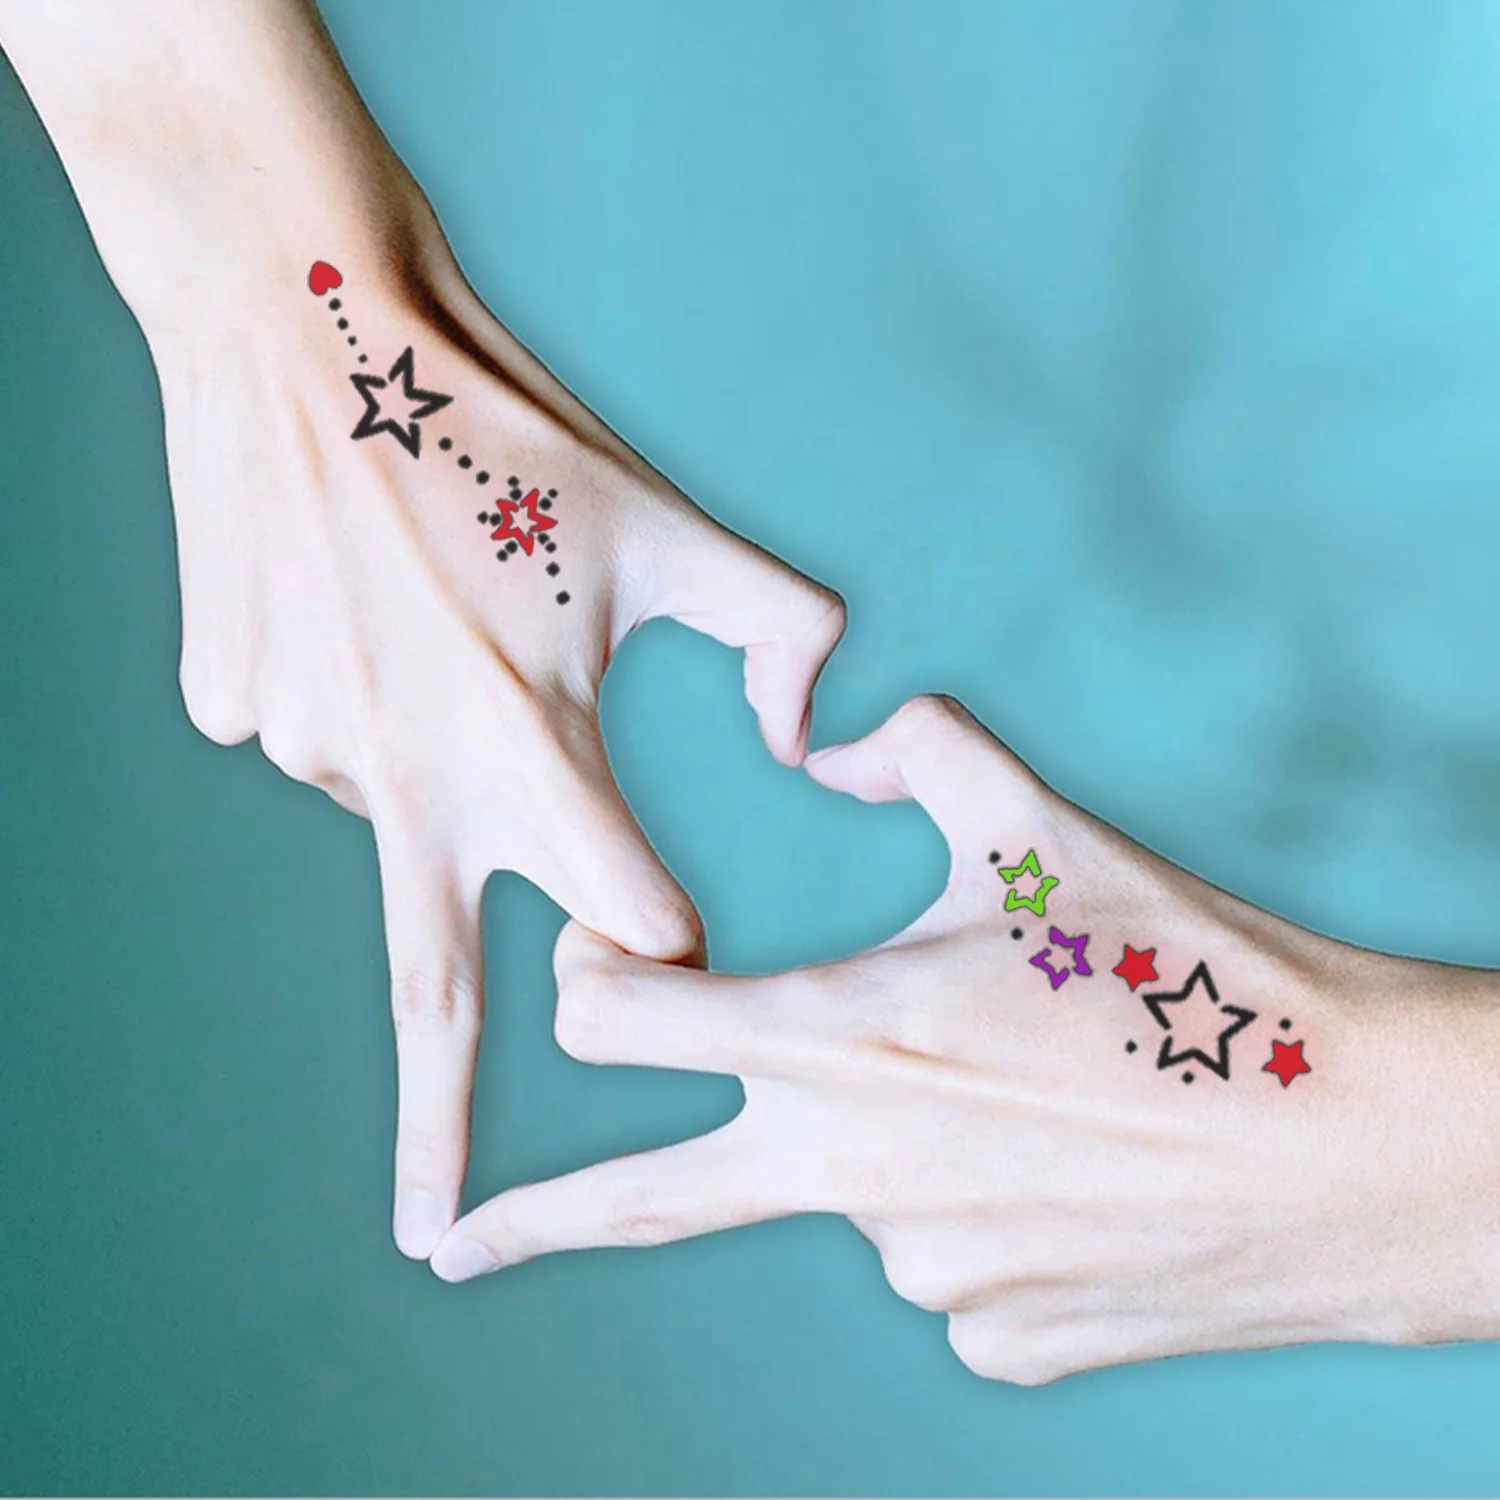 New Designs Henna Tattoo Stencil Kit Temporary Tattoo Templates Self-adhesive Indian Arabian Tattoo Sticker For Body Paint